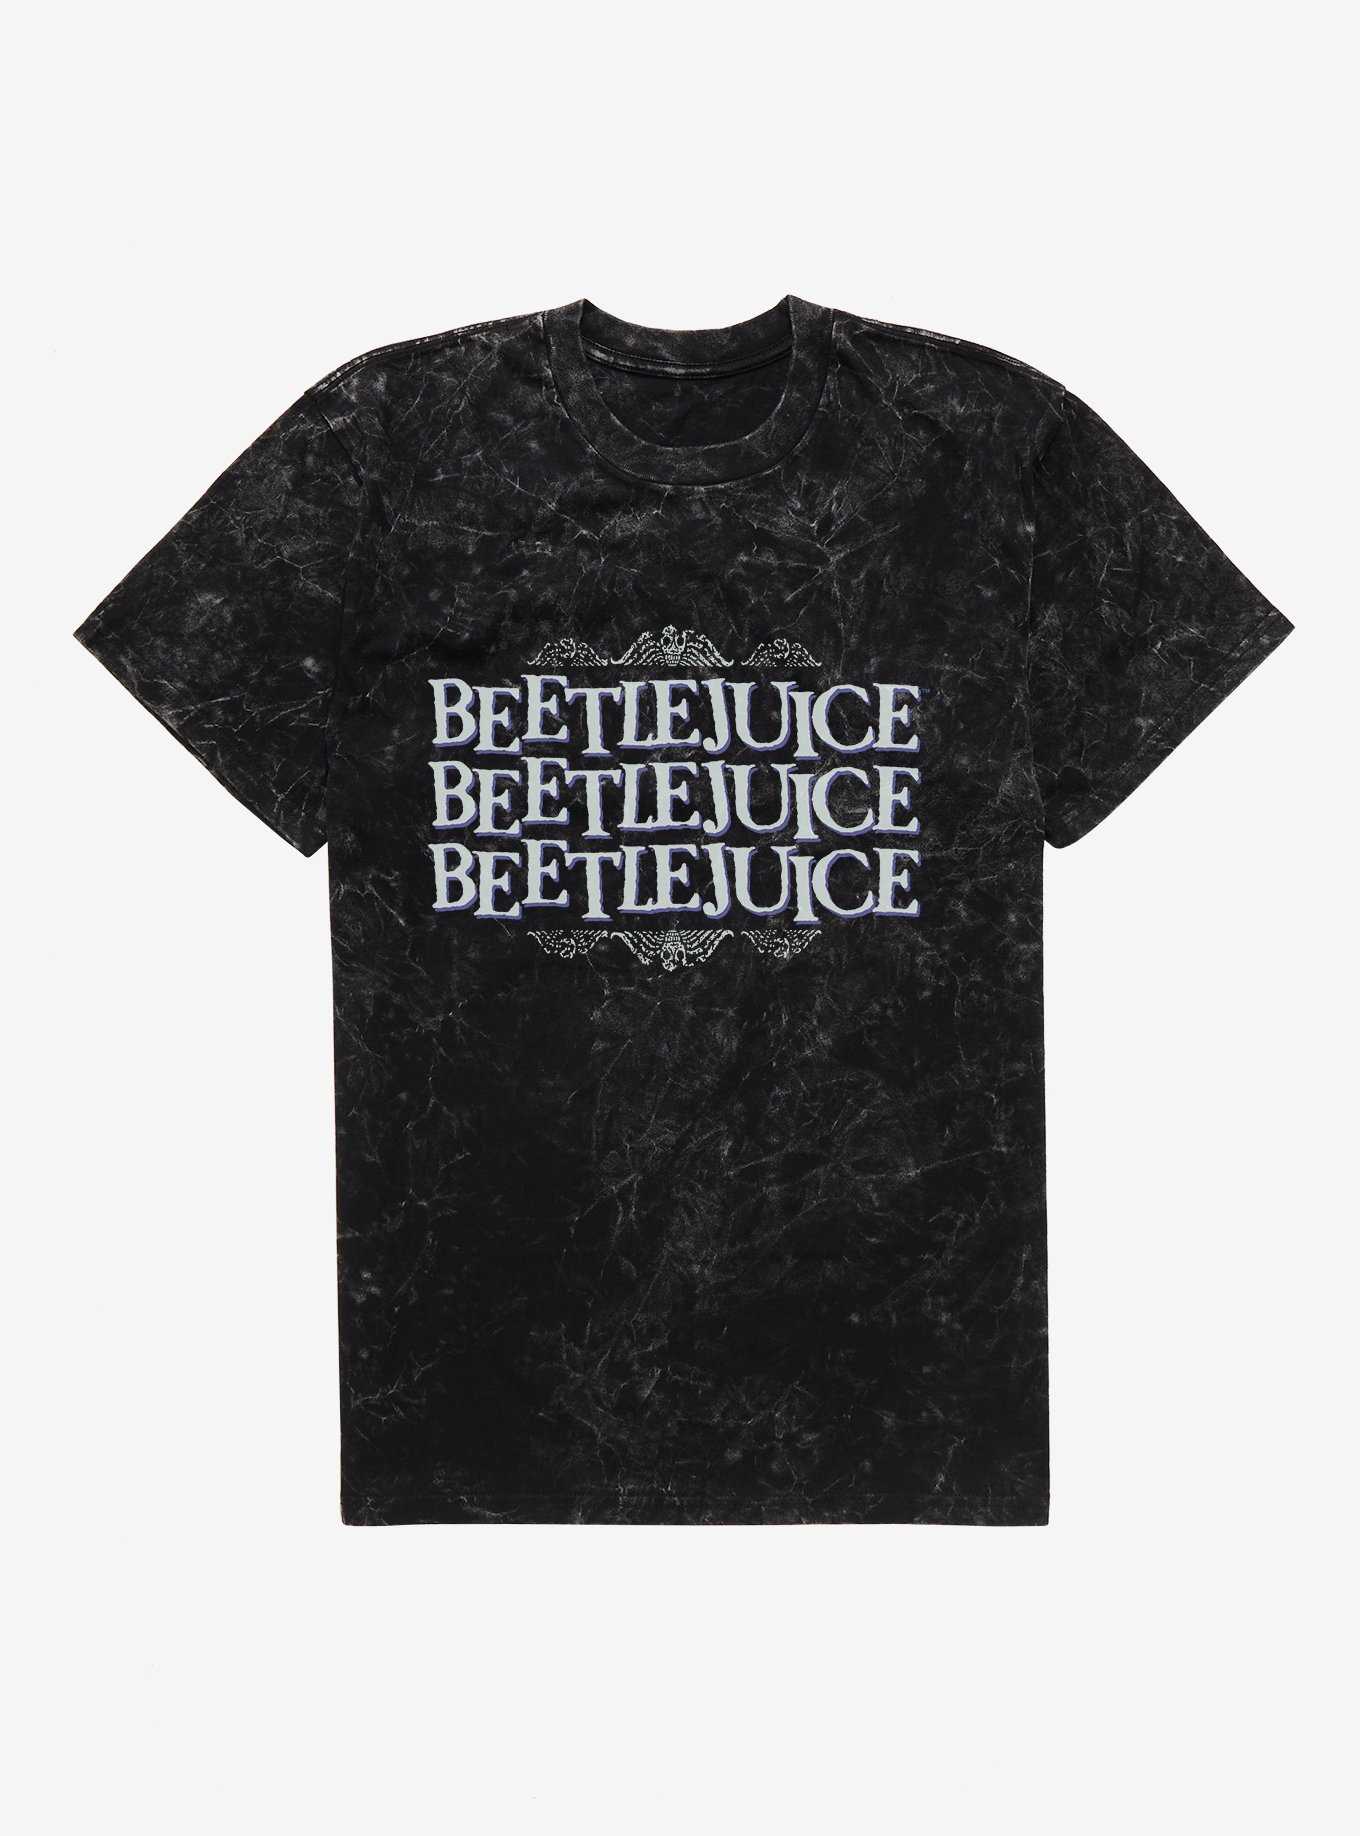 Beetlejuice Say It Three Times Mineral Wash T-Shirt, , hi-res